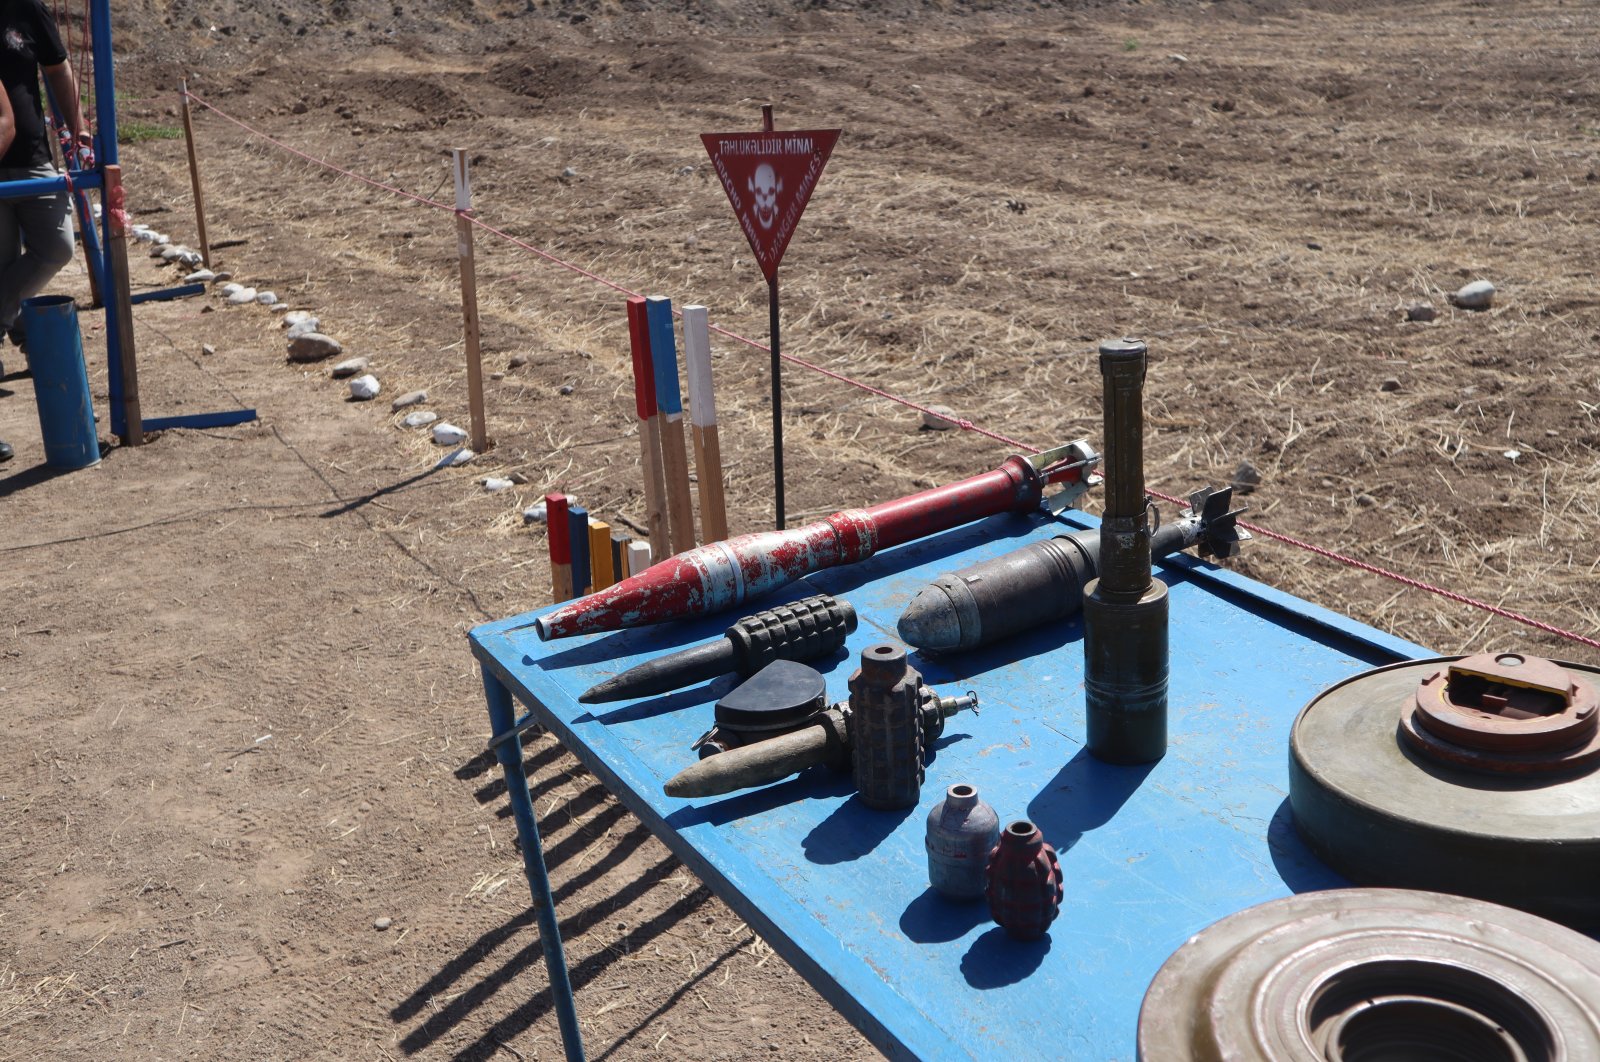 Mines planted by Armenia are found in Fuzuli, in the Karabakh region, Azerbaijan, Sept. 16, 2022 (Photo by Dilara Aslan Özer)